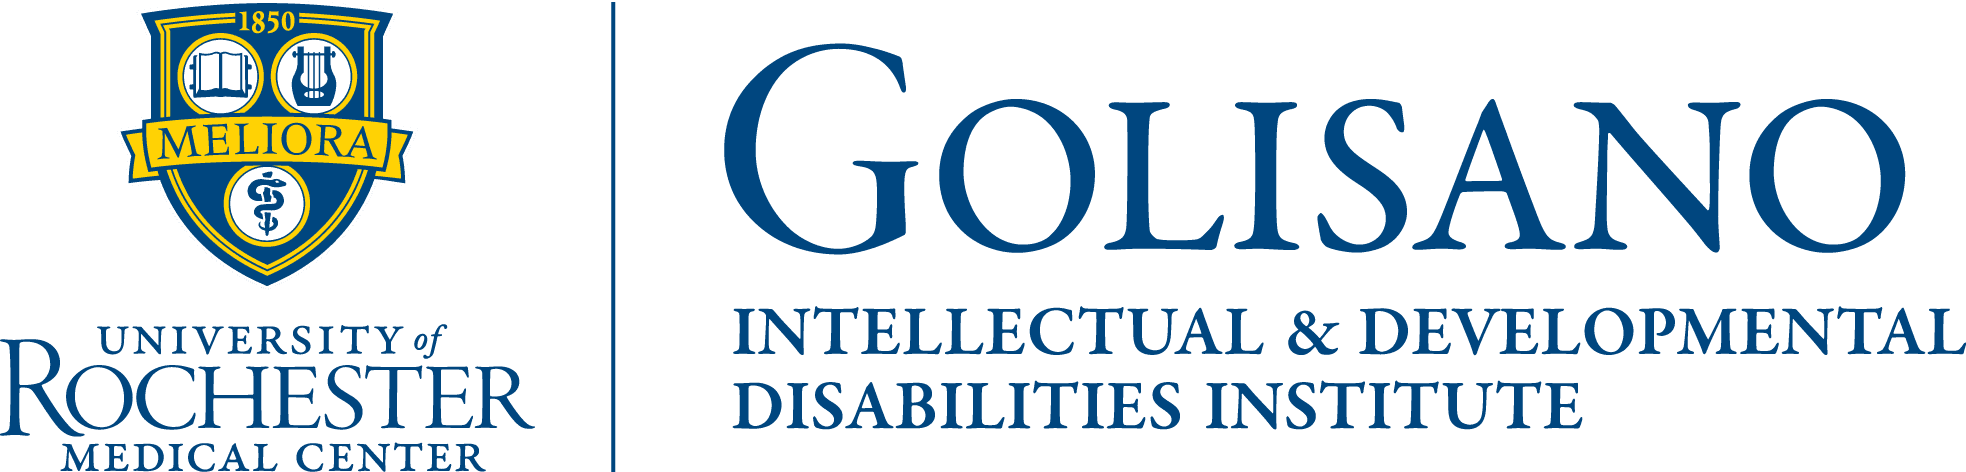 University of Rochester and Golisano Intellectual & Developmental Disabilities Institute logos